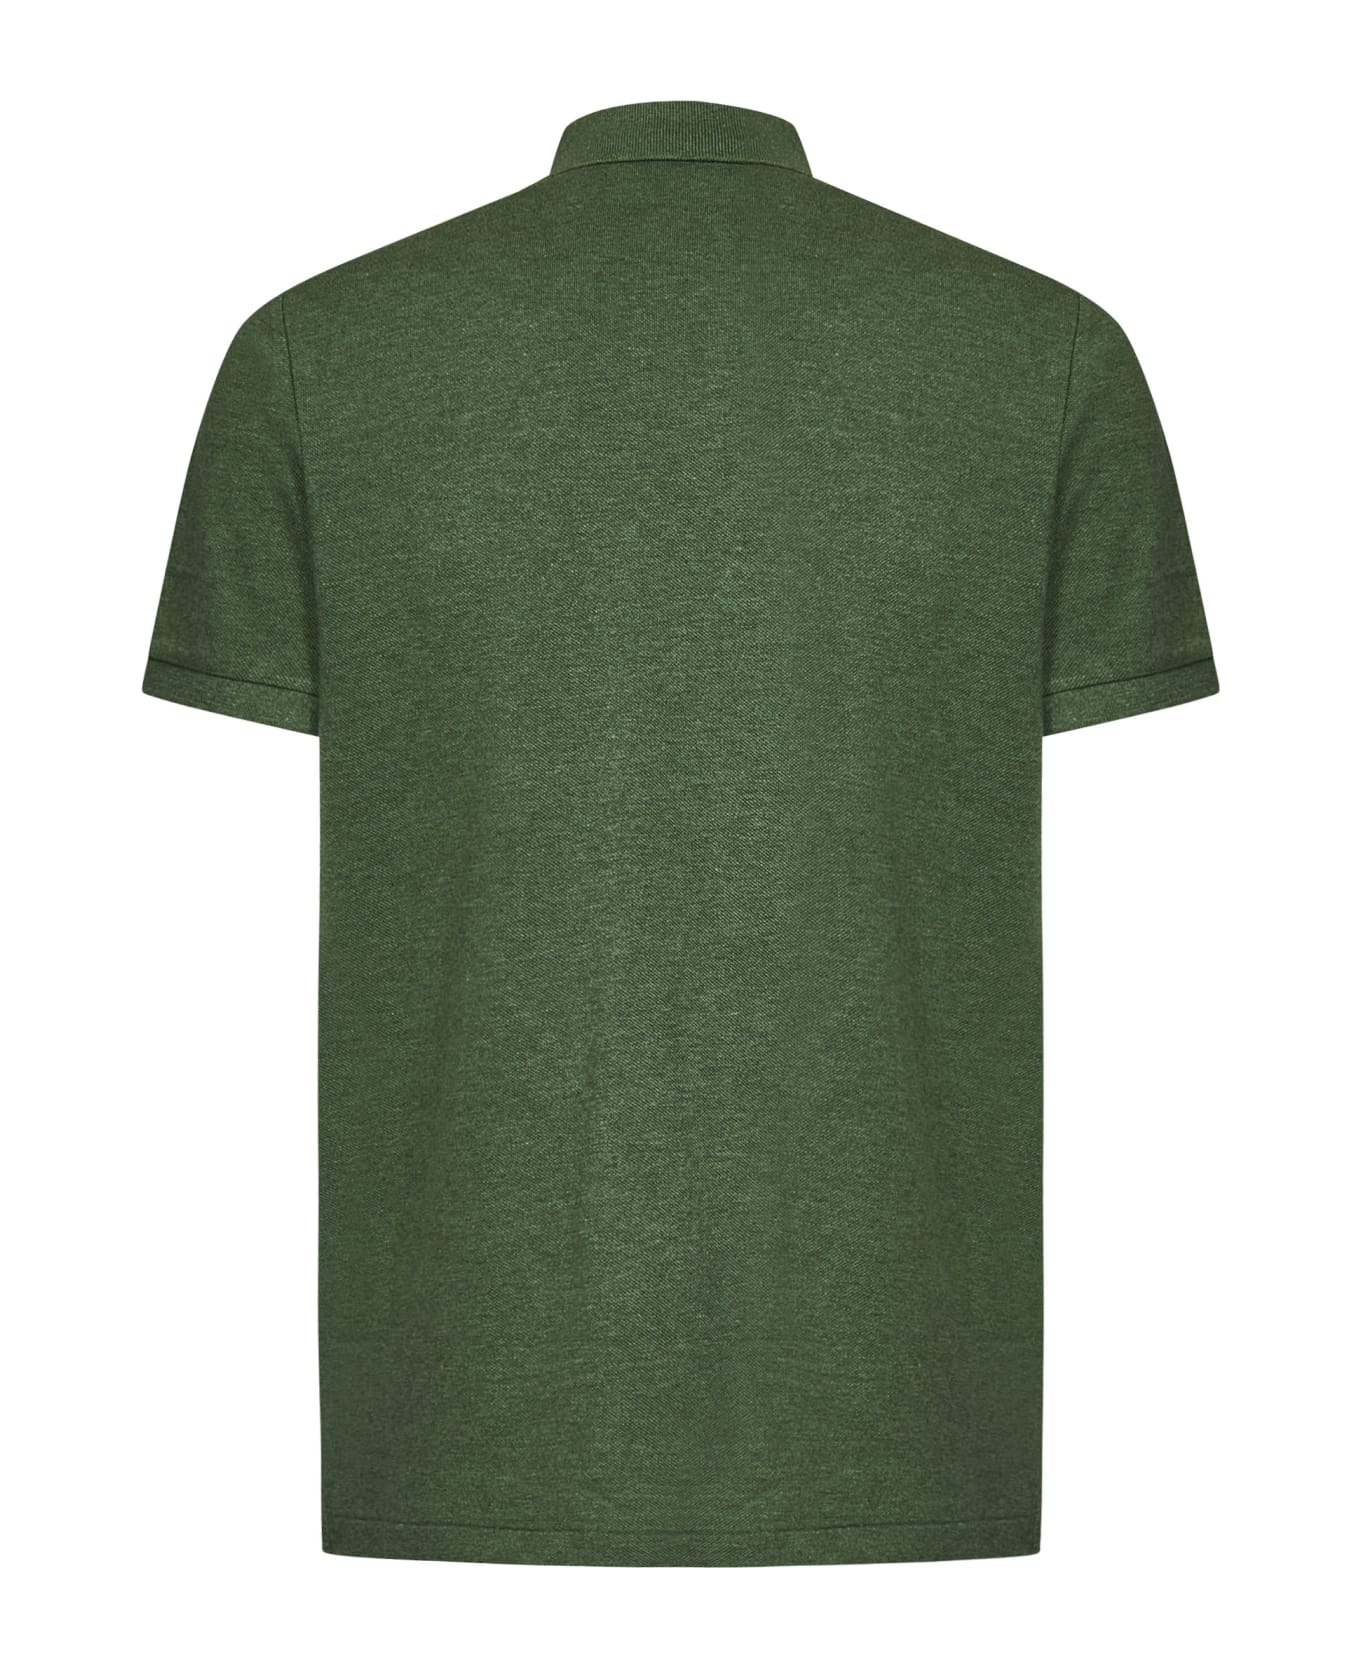 Polo Ralph Lauren Polo Shirt - green